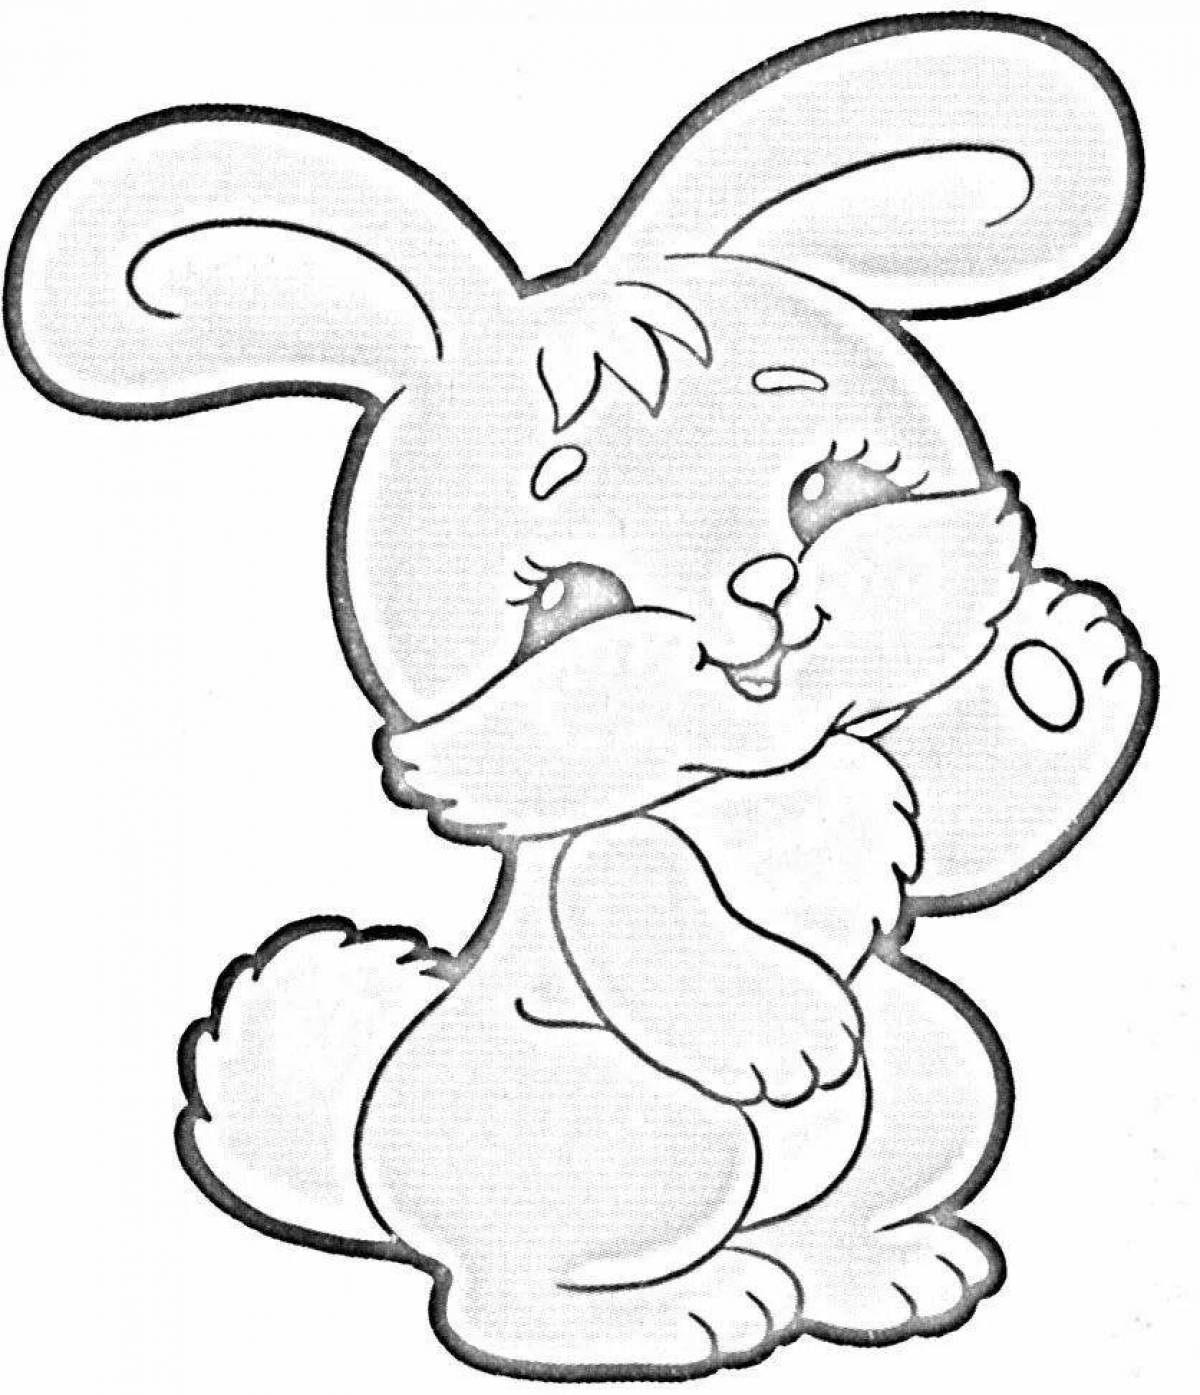 Joyful bunny drawing coloring book